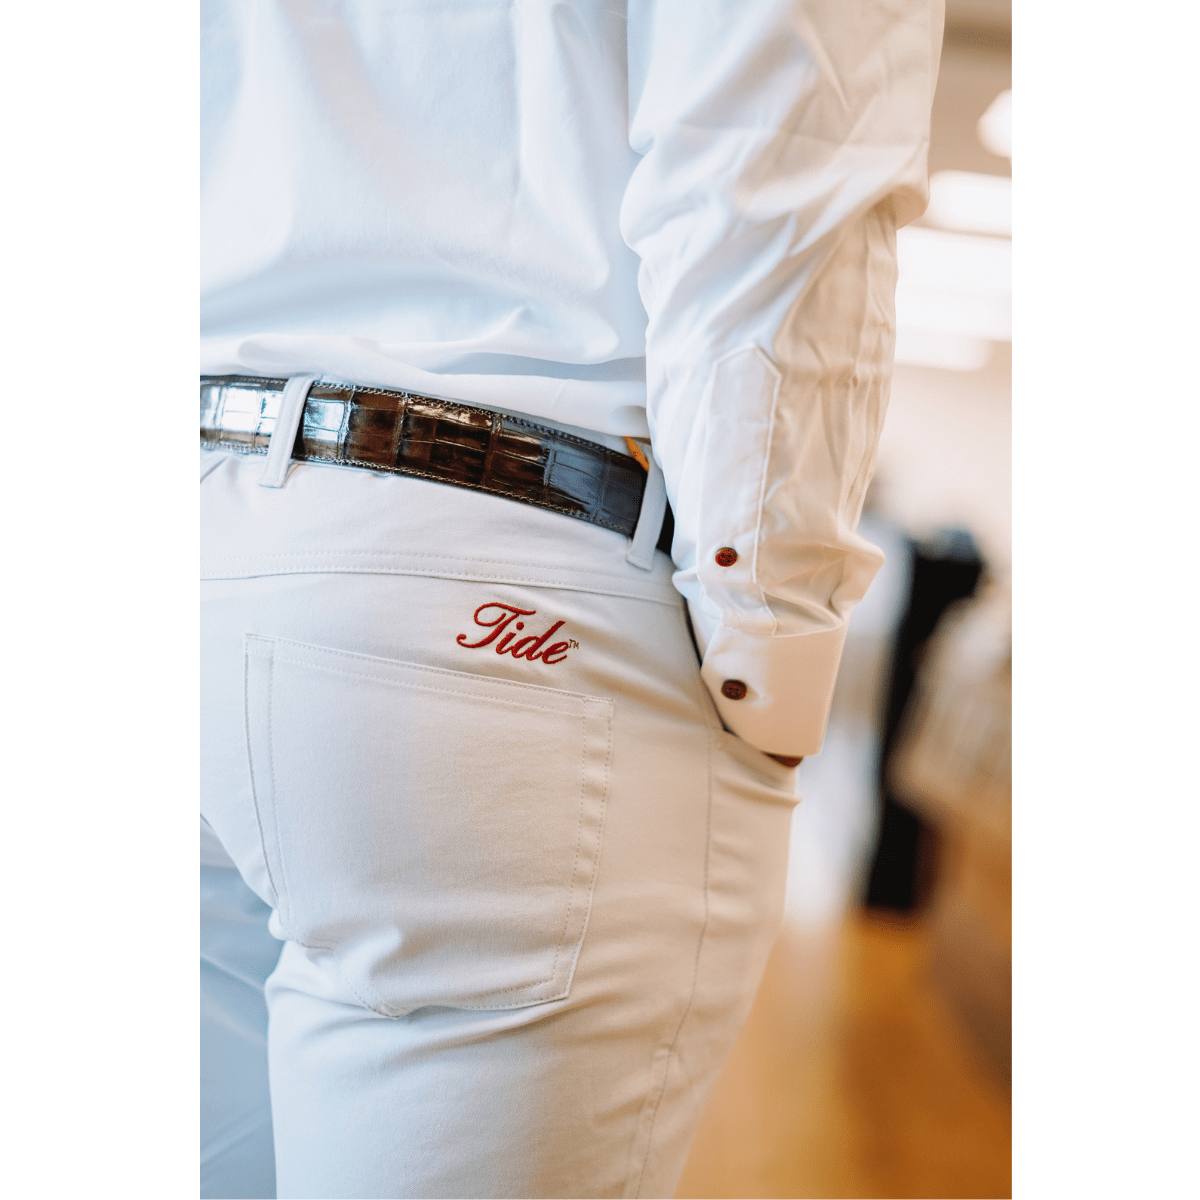 eb66 Performance Five-Pocket Pant, Men's Pants